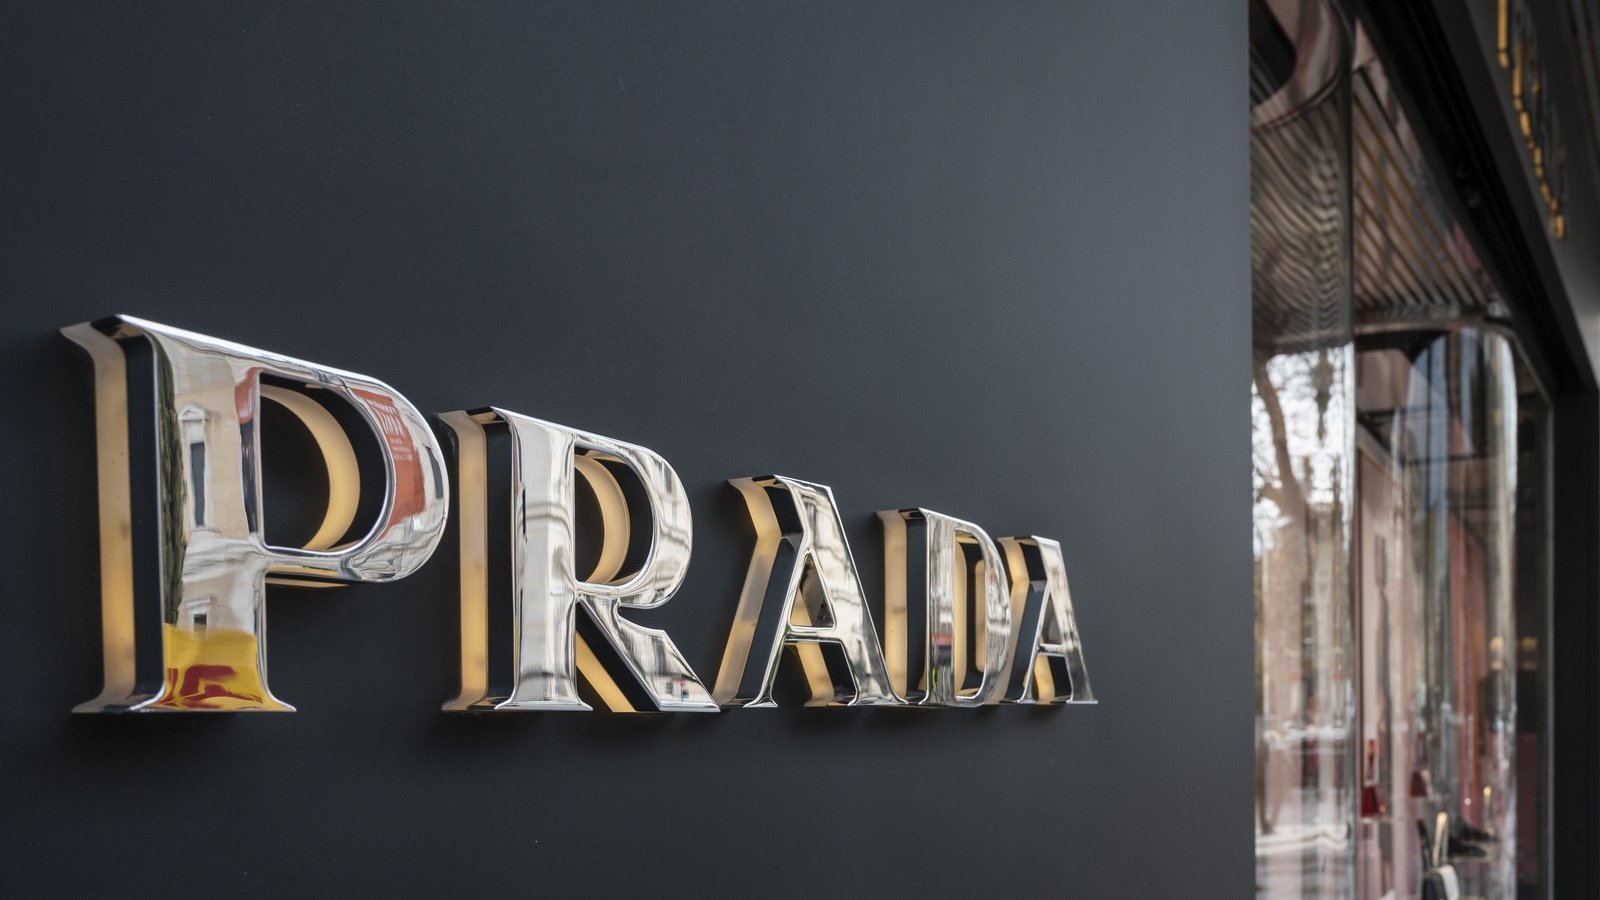 Prada to name former Luxottica chief Guerra as new CEO